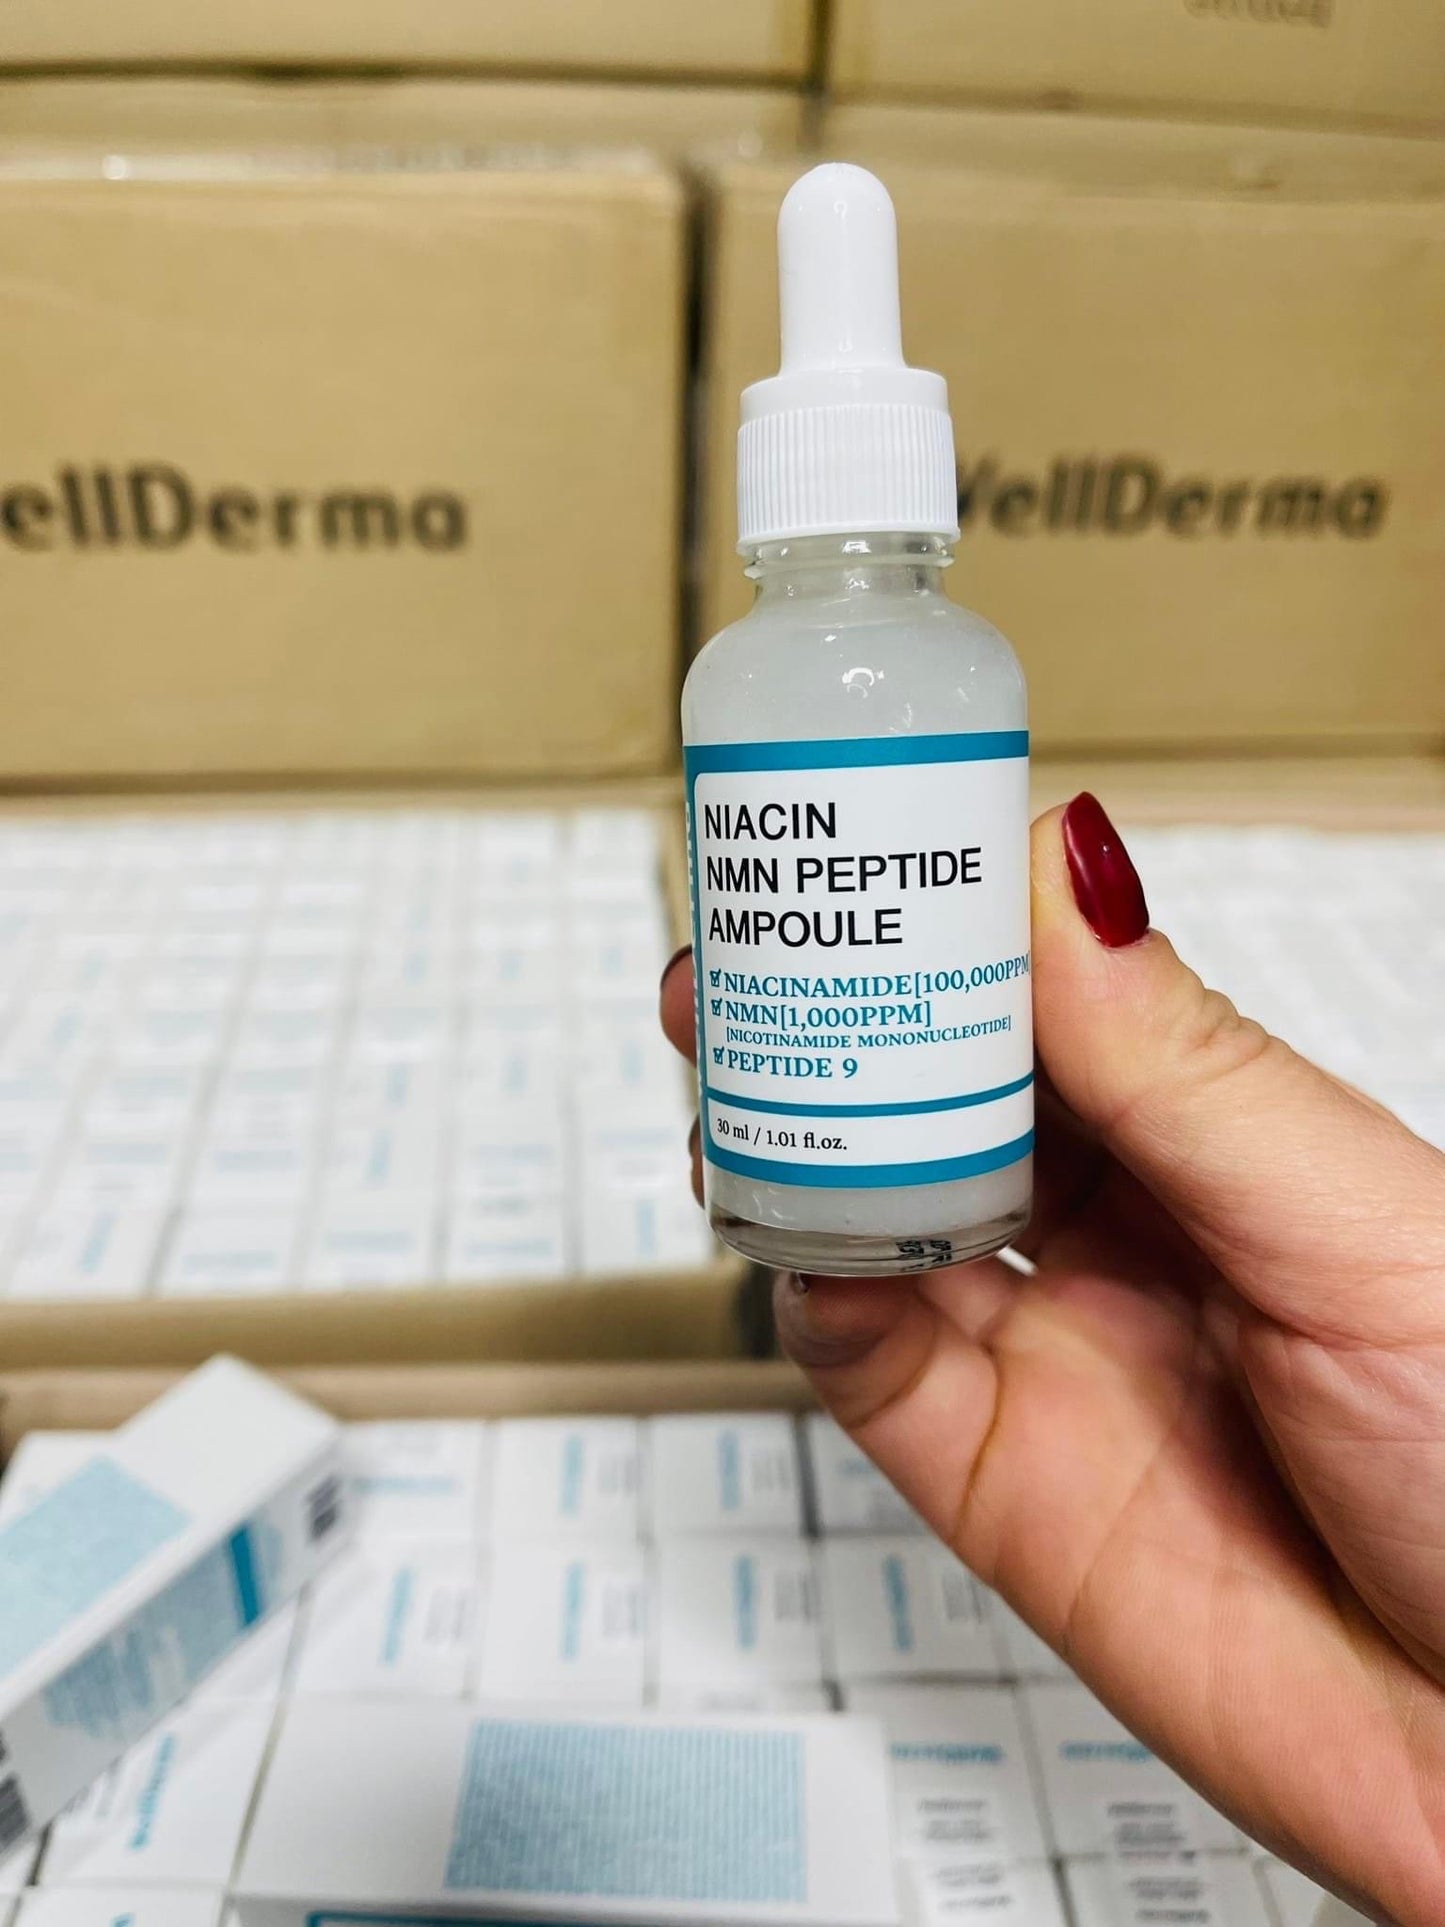 Ampoule Niacin NMN peptide wellderma G plus